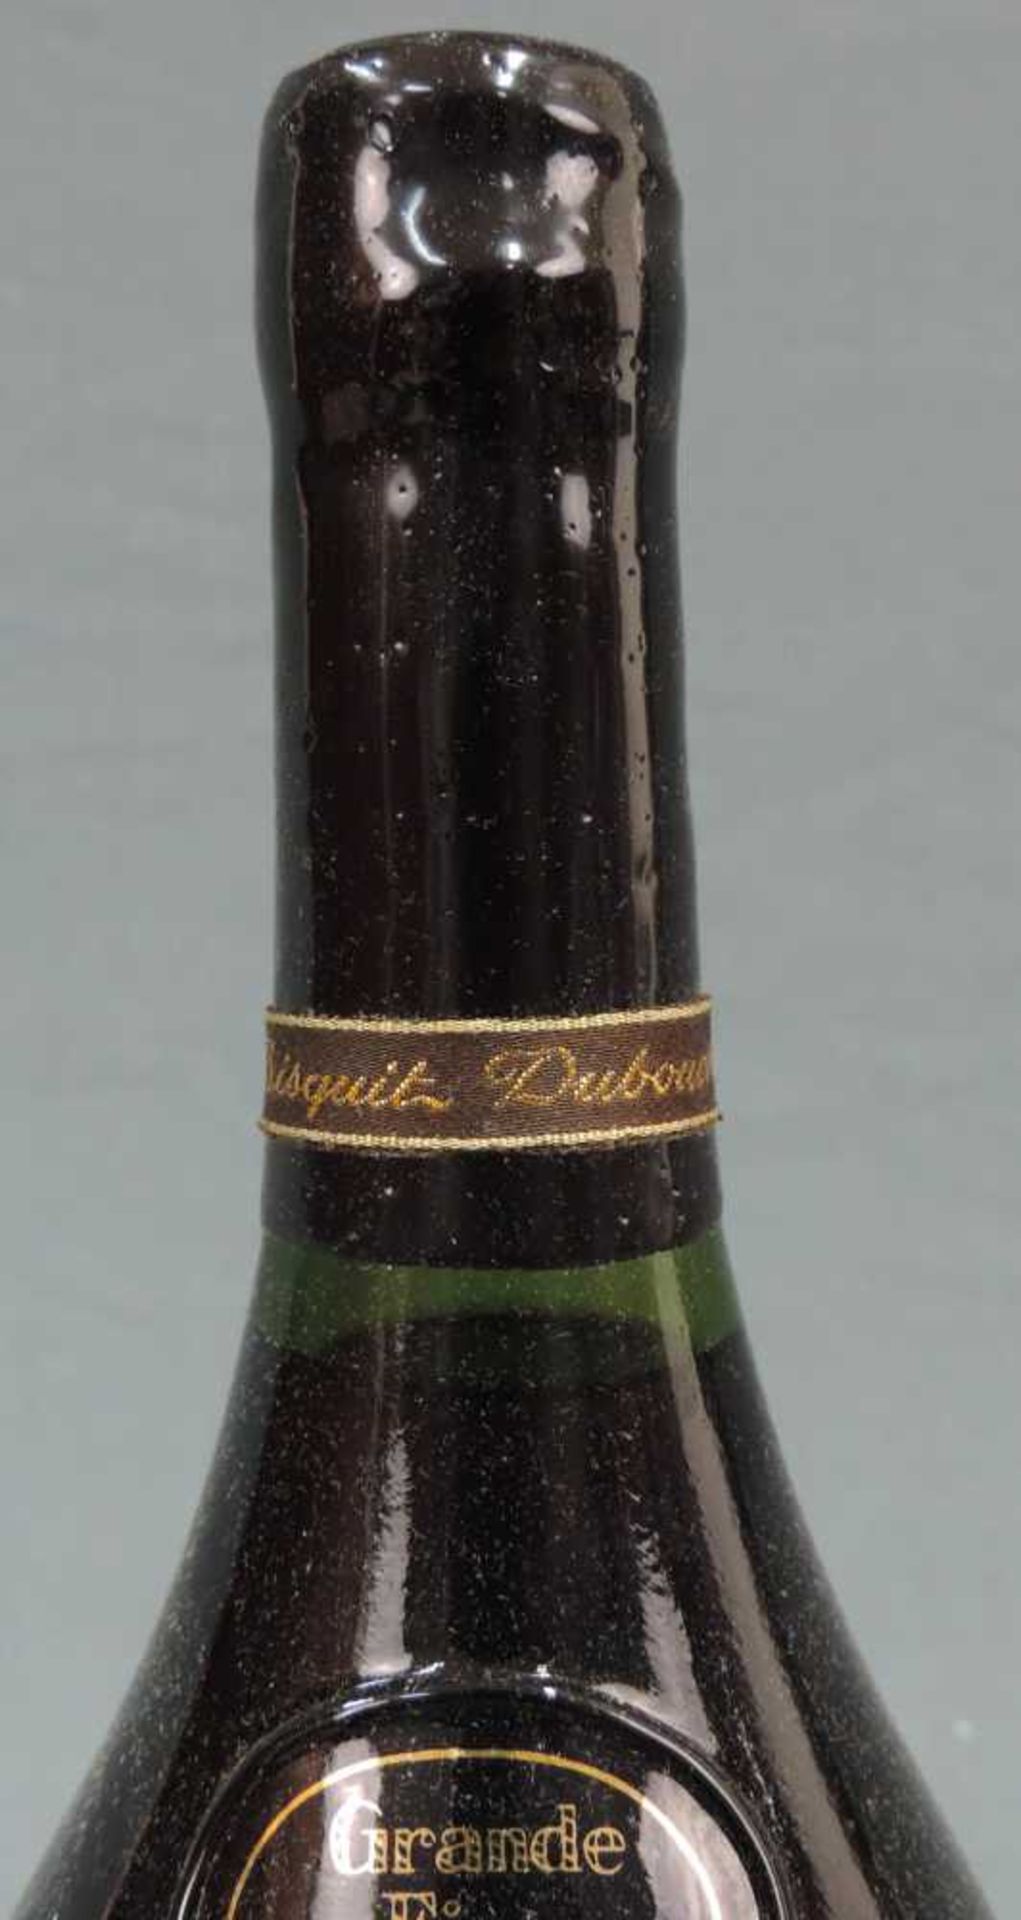 Grande Fine Champagne, Bisquit Dubouche Cognac Grande Fine Champagne, Extra Vieille. 40%, 70cl. - Image 9 of 10